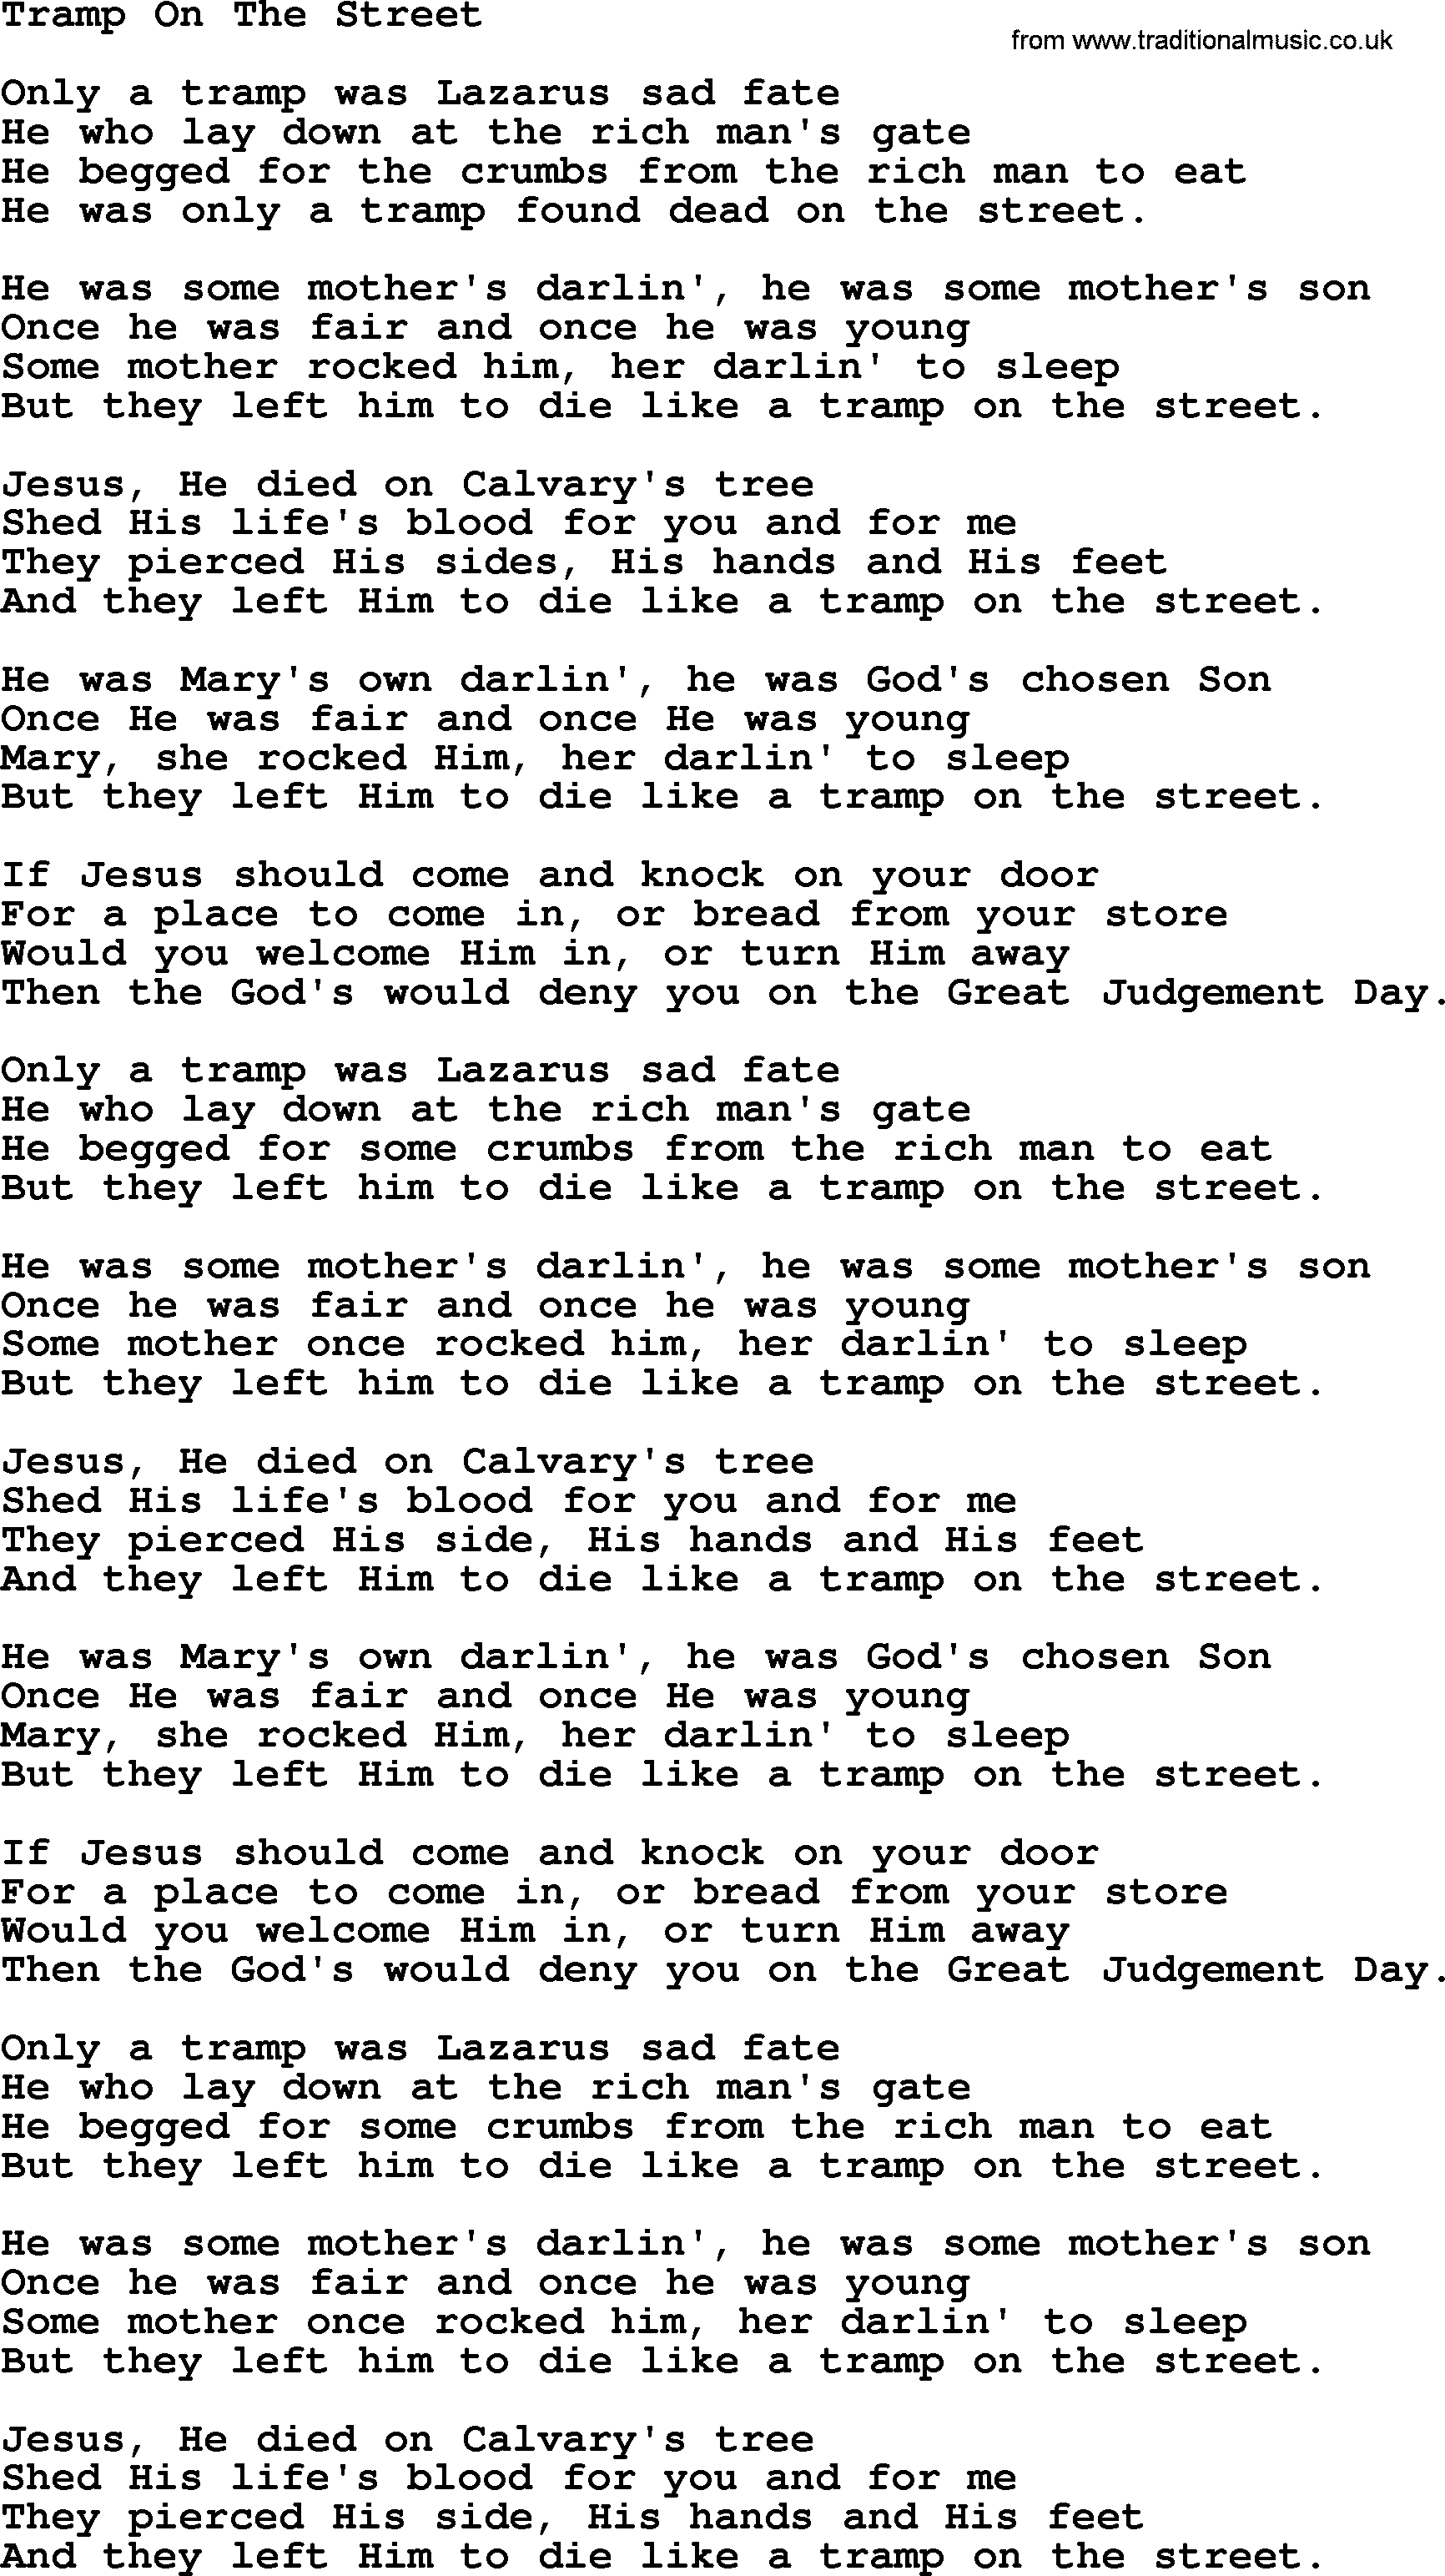 Hank Williams song Tramp On The Street, lyrics